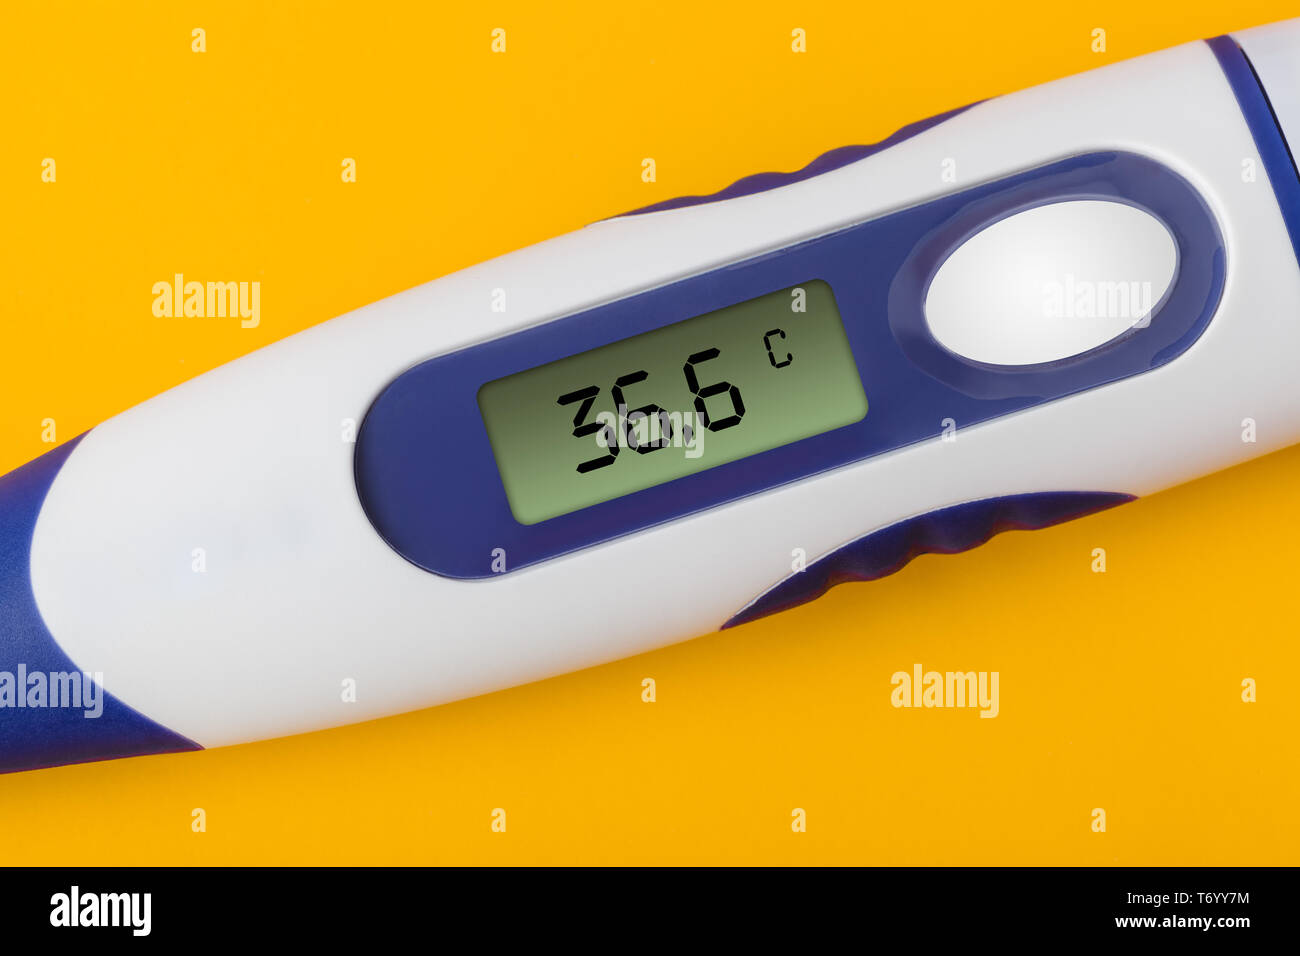 Termómetros médicos electrónicos (36,6 grados) sobre fondo amarillo  Fotografía de stock - Alamy